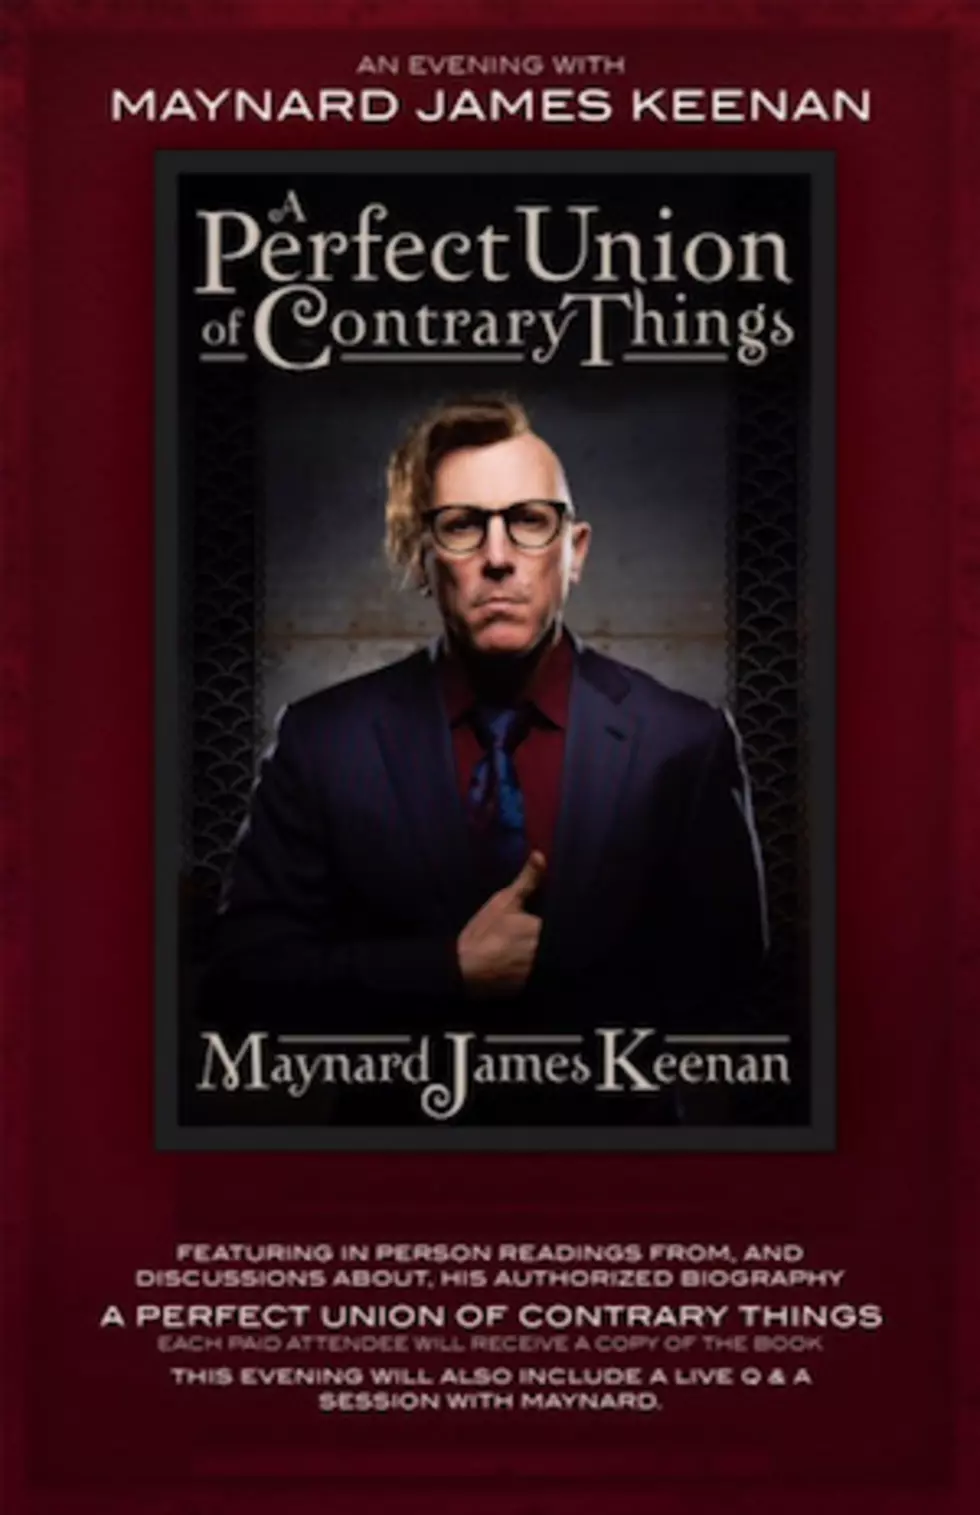 Maynard James Keenan To Embark on Book Tour for Upcoming Memoir [Update]